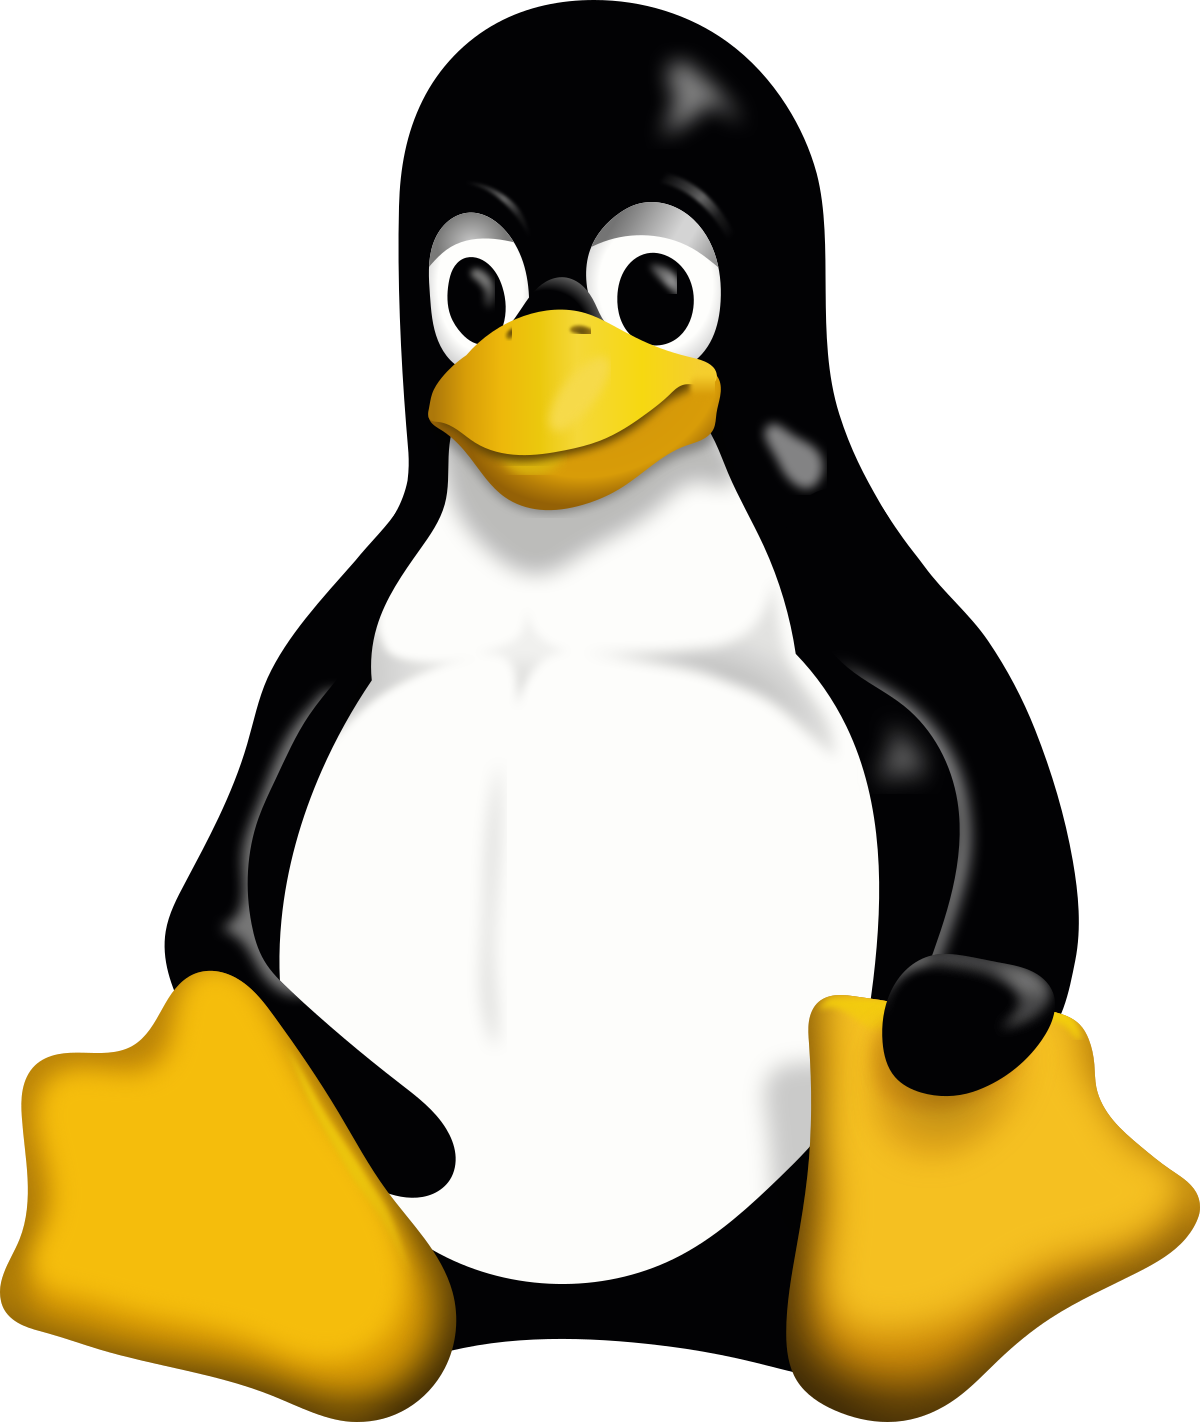 Linux and Unix scripting